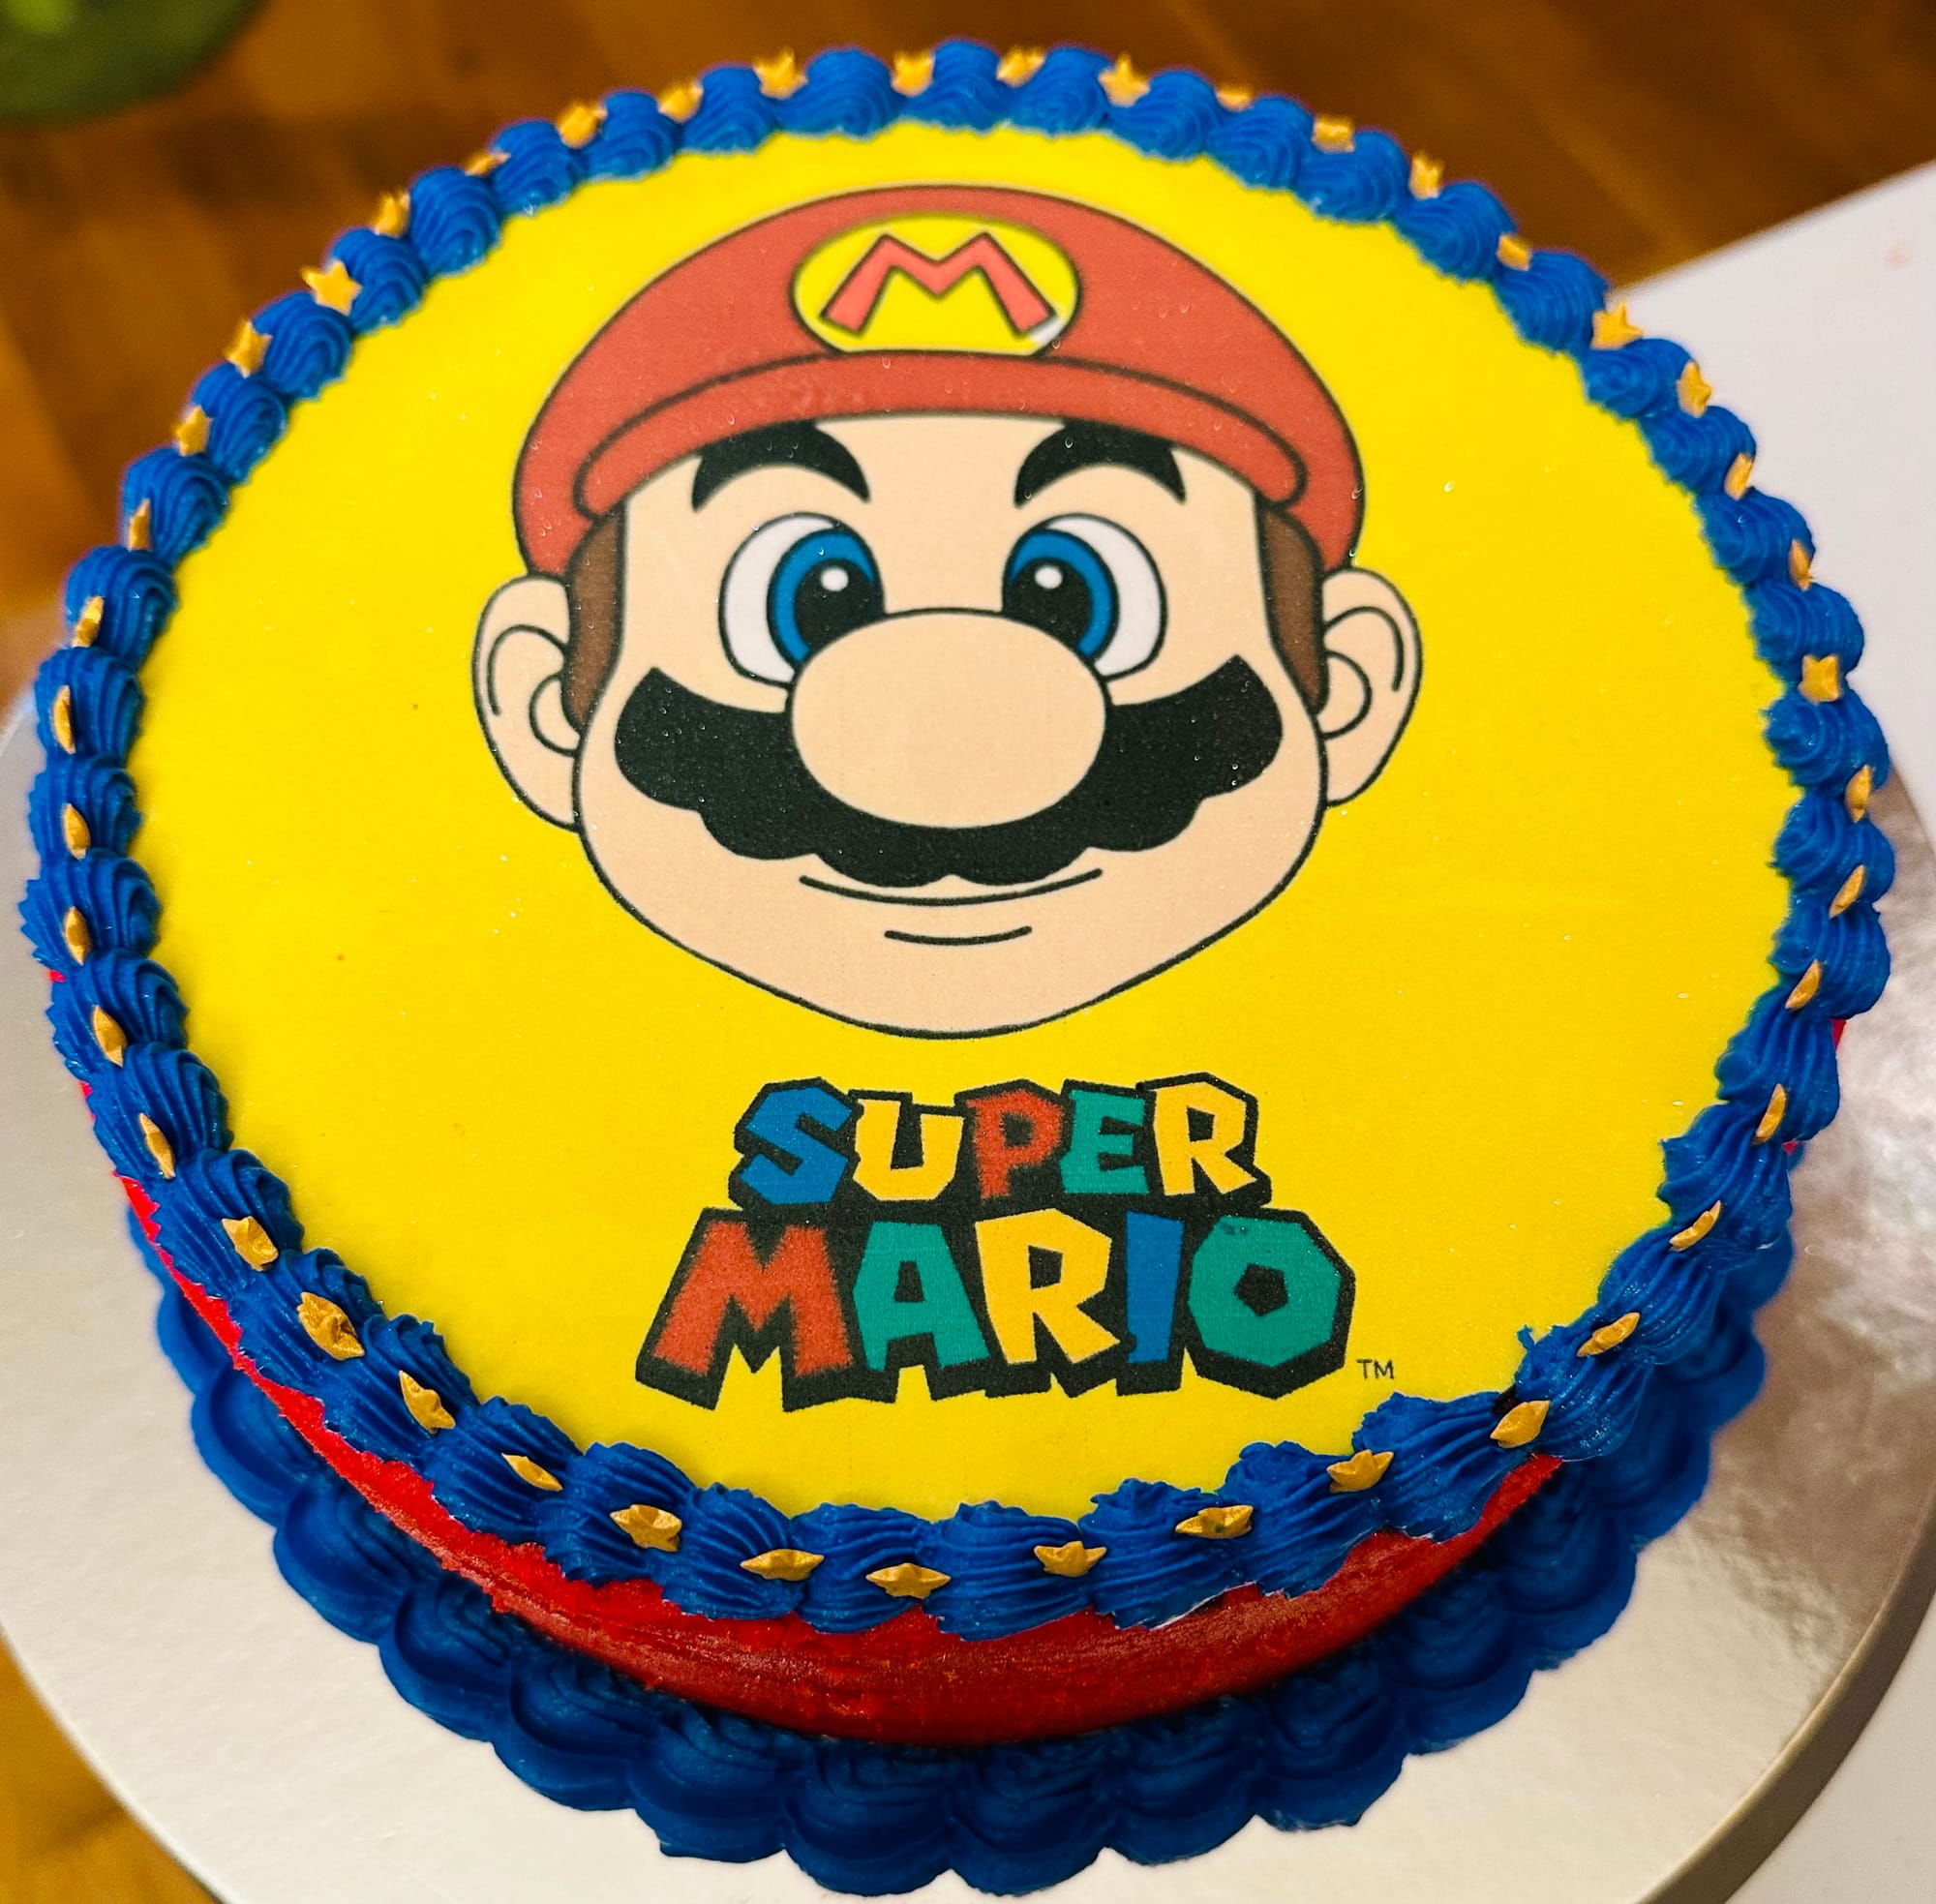 2 Layer Vanilla Egg-Free Super Mario Birthday Cake with Buttercream Frosting